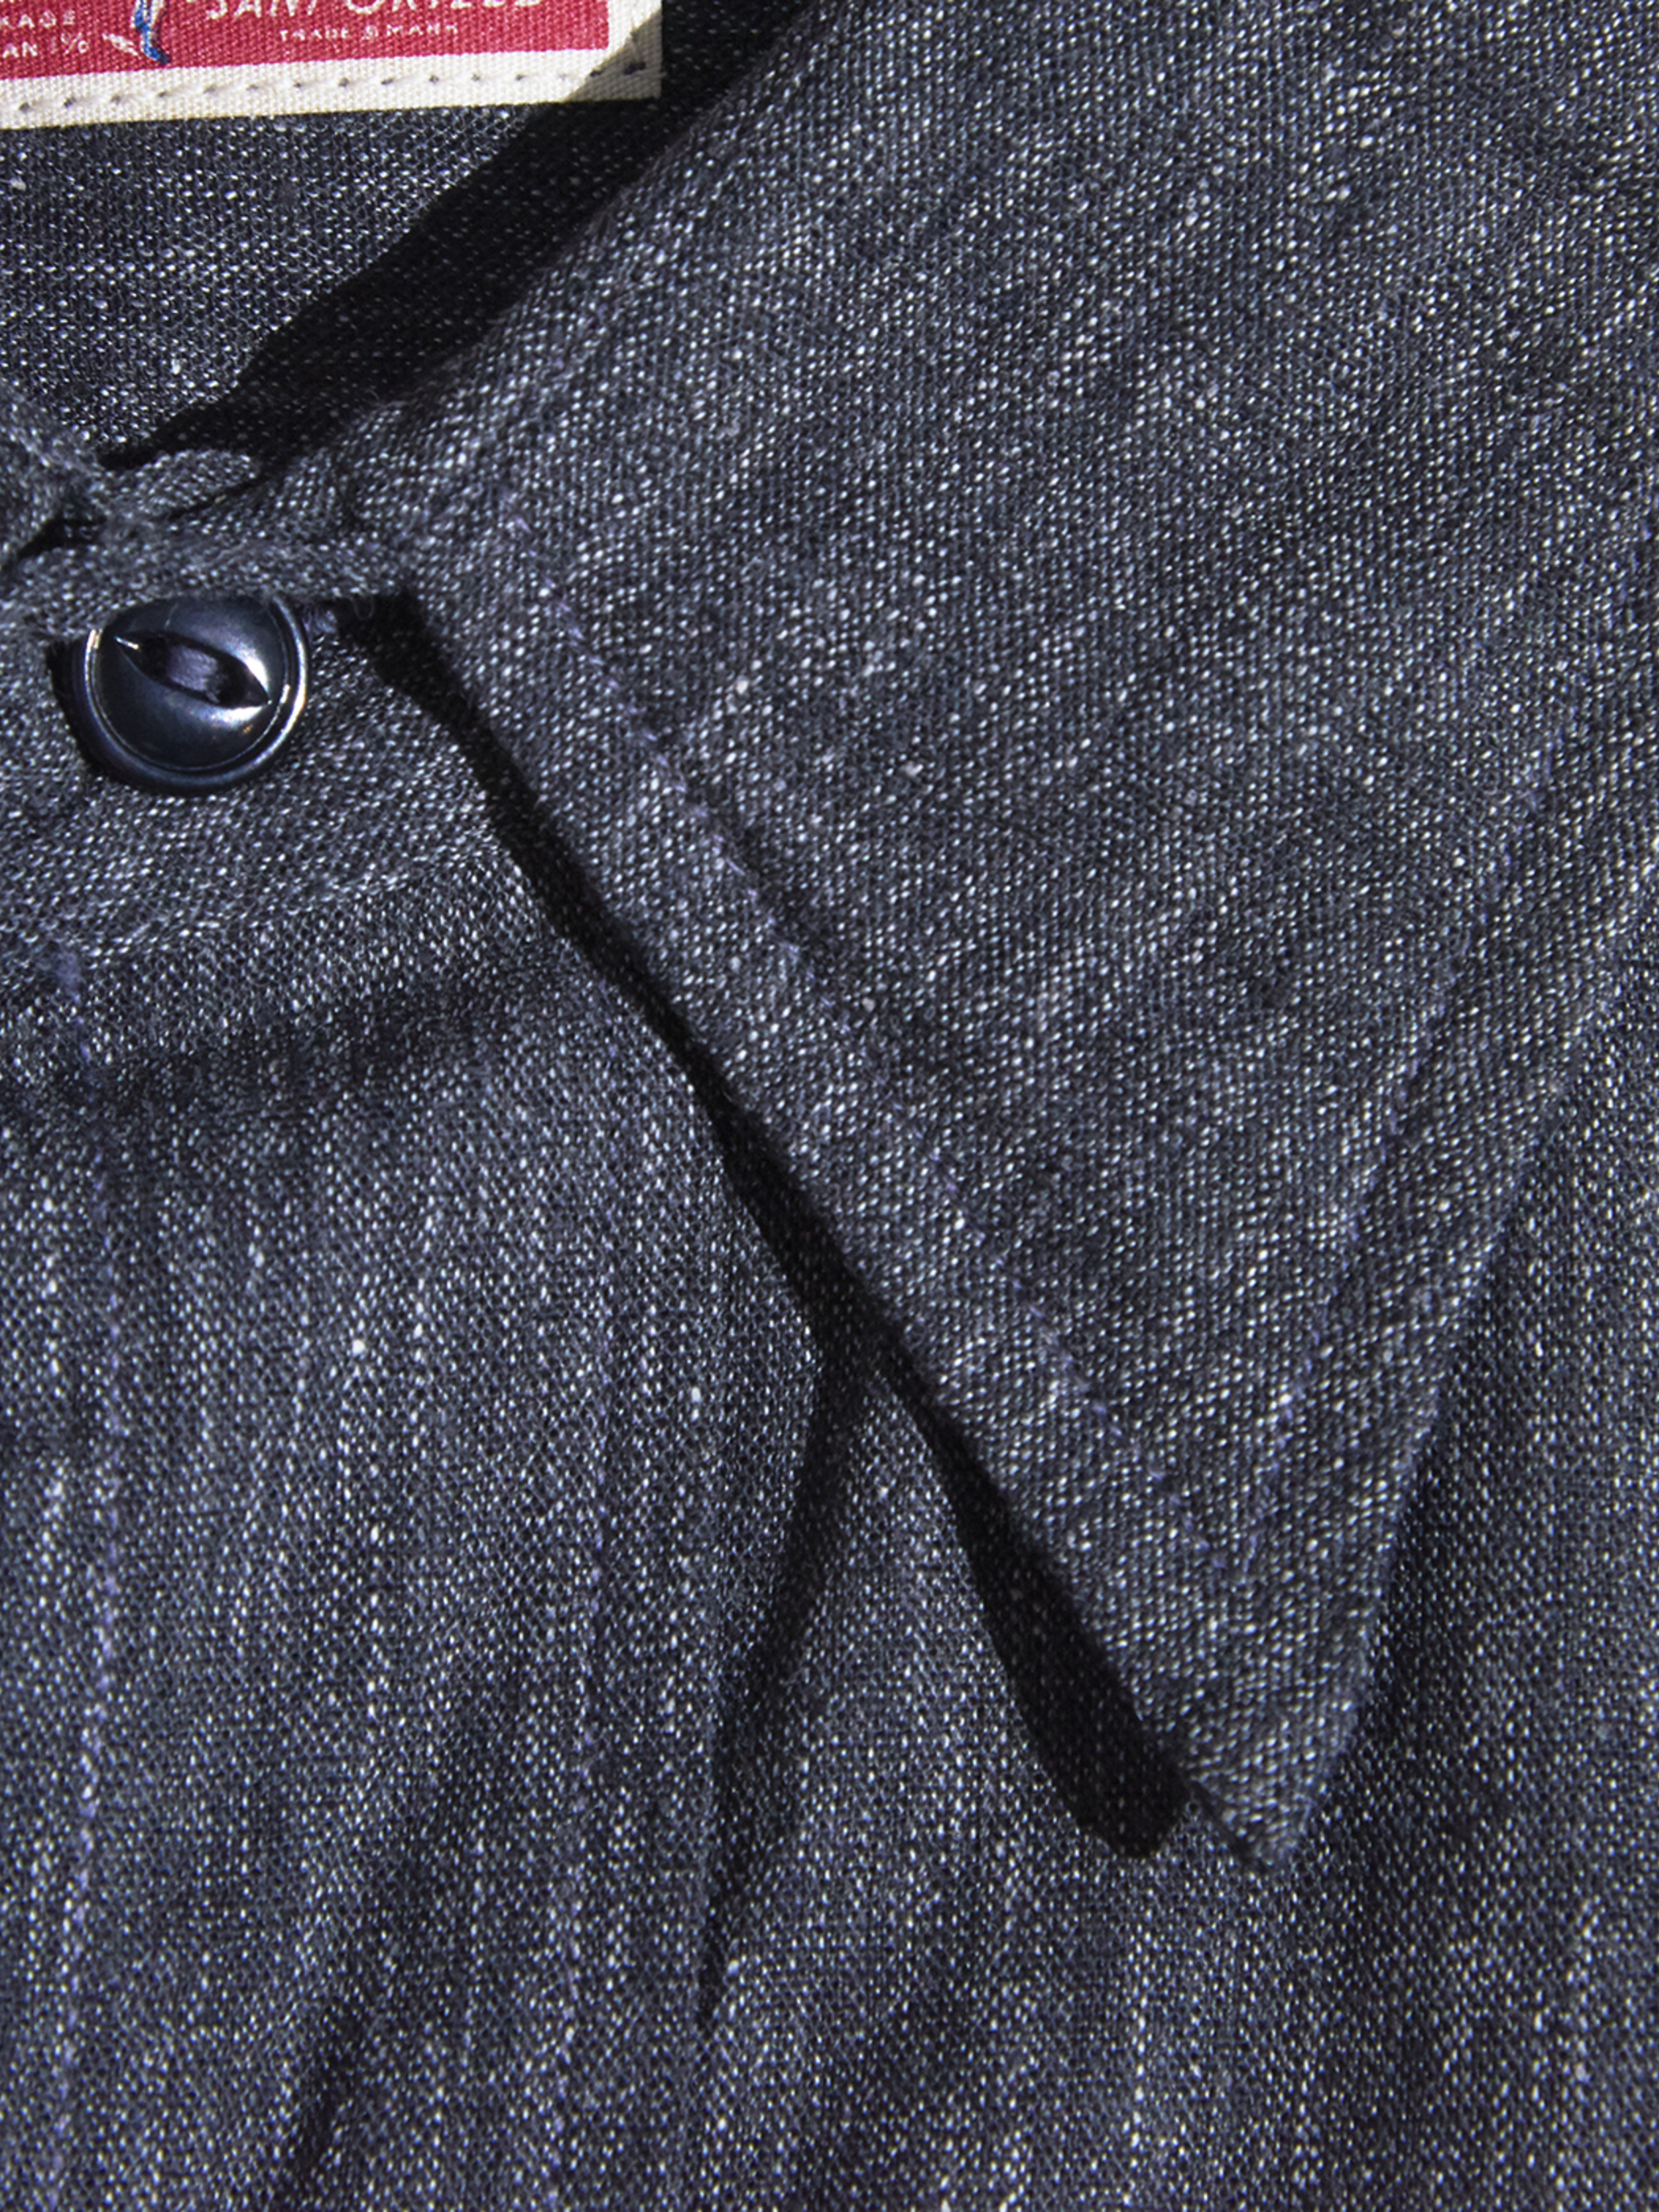 1950s "BIG LEED" black chambray work shirt -GRAY-